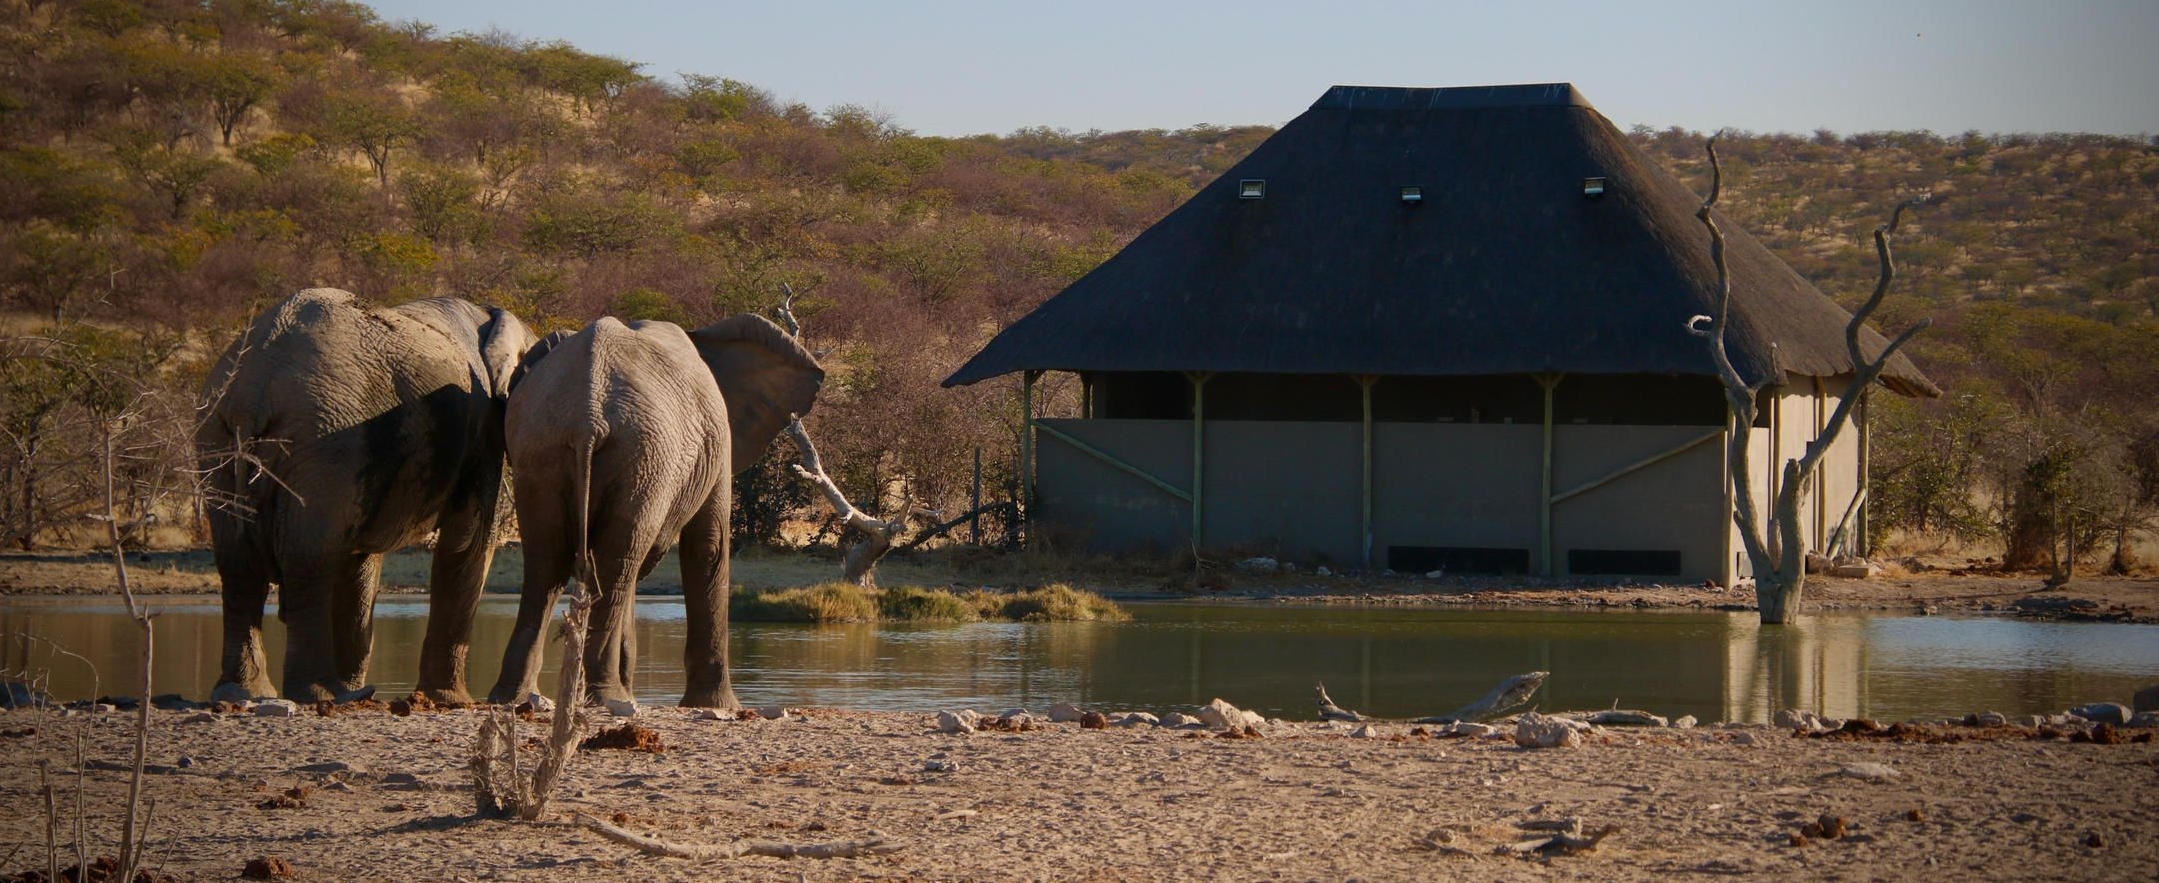 Safarihoek Lodge Elephants at the hide